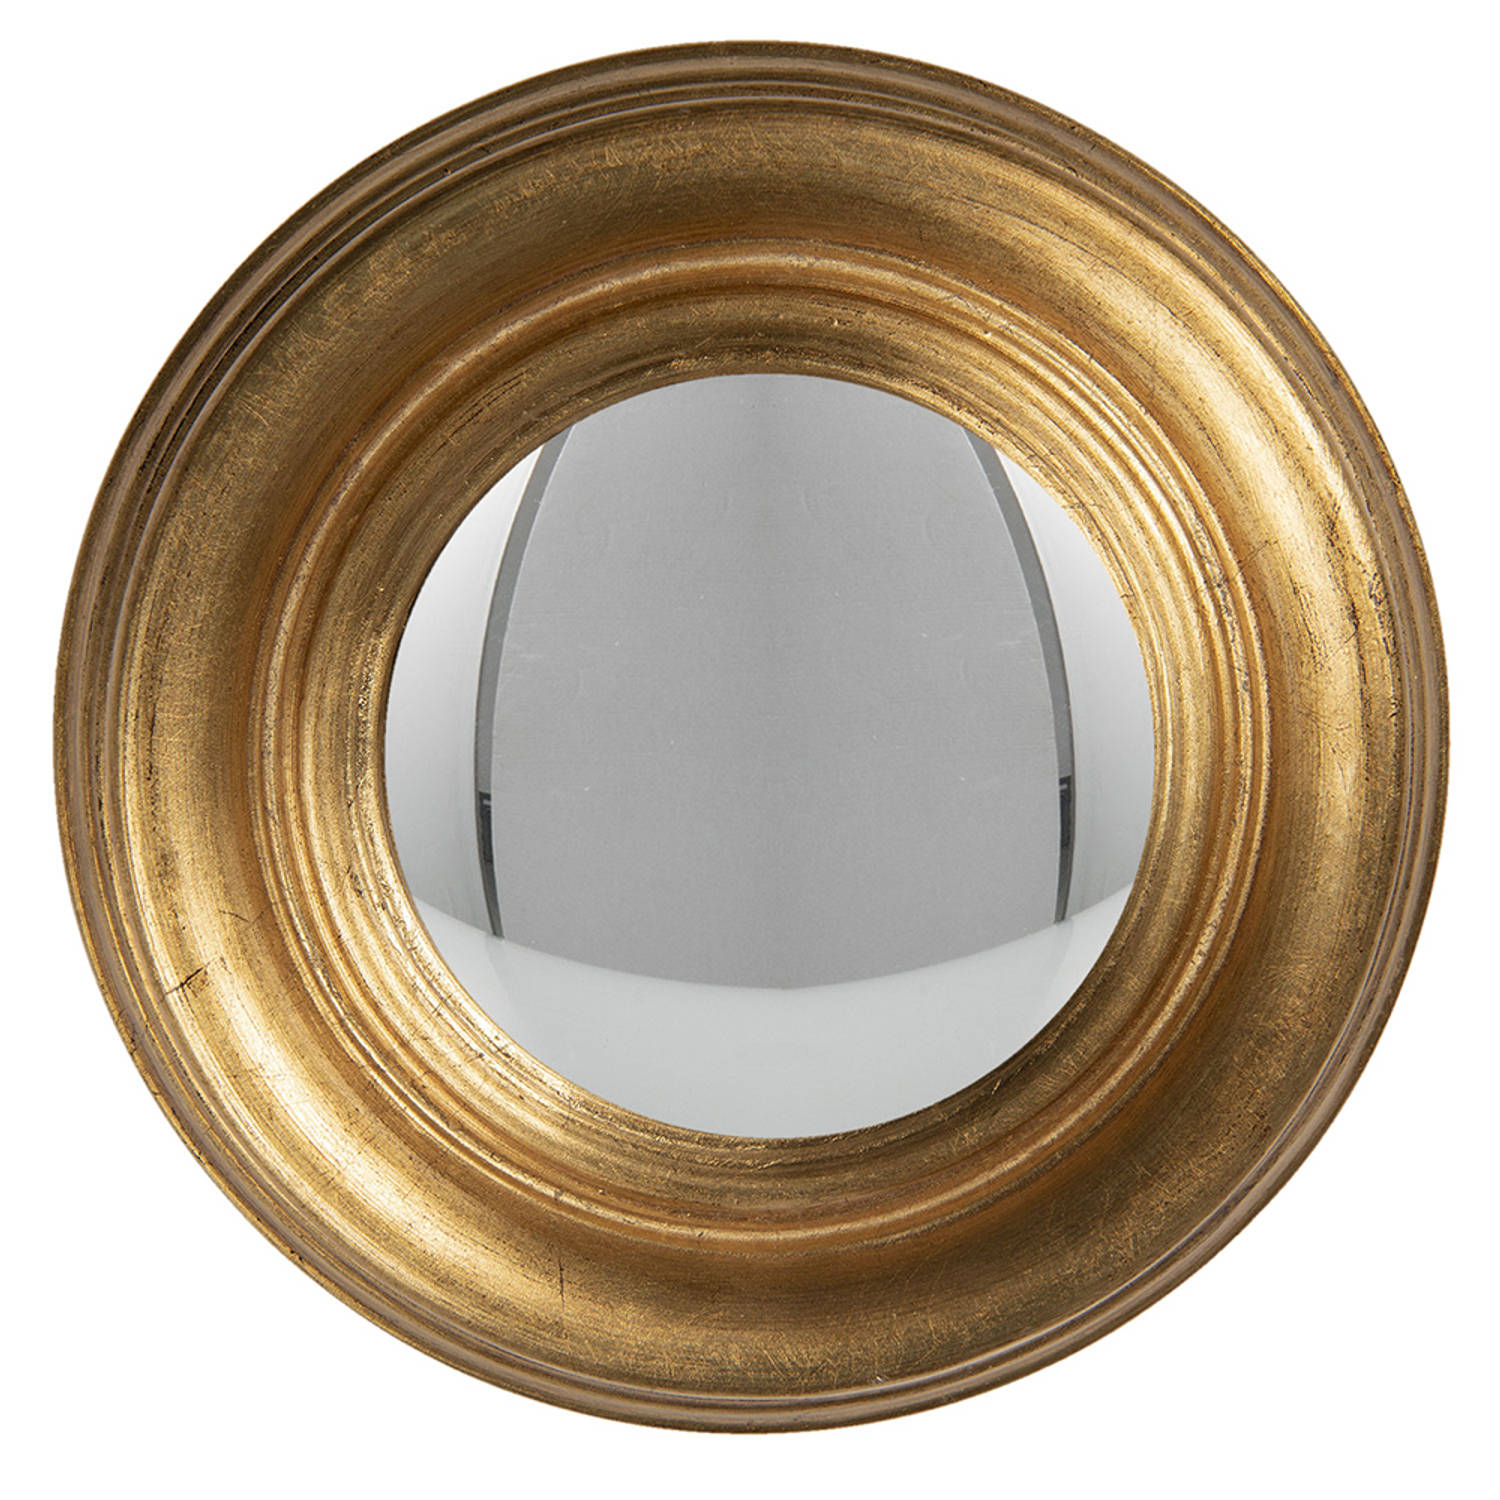 HAES DECO - Bolle ronde Spiegel - Kleur Goudkleurig - Formaat Ø 24x3 cm - Materiaal Hout / Glas - Wandspiegel, Spiegel rond, Convex Glas